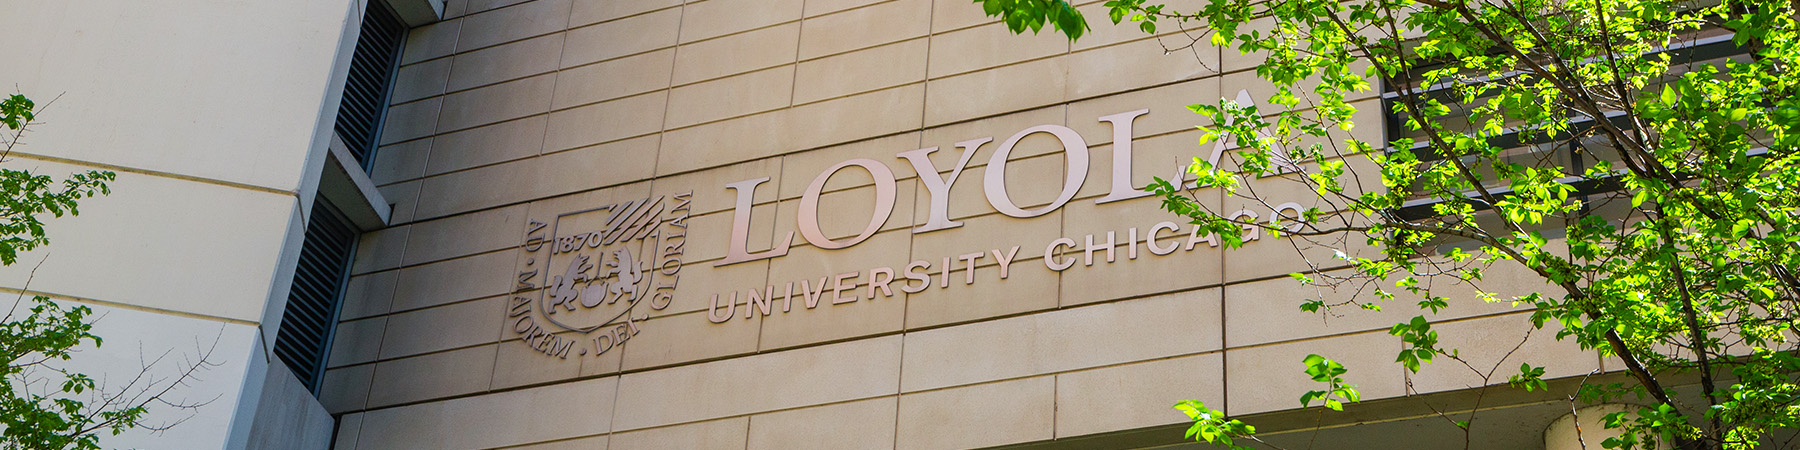 Loyola Chicago School of Communication building